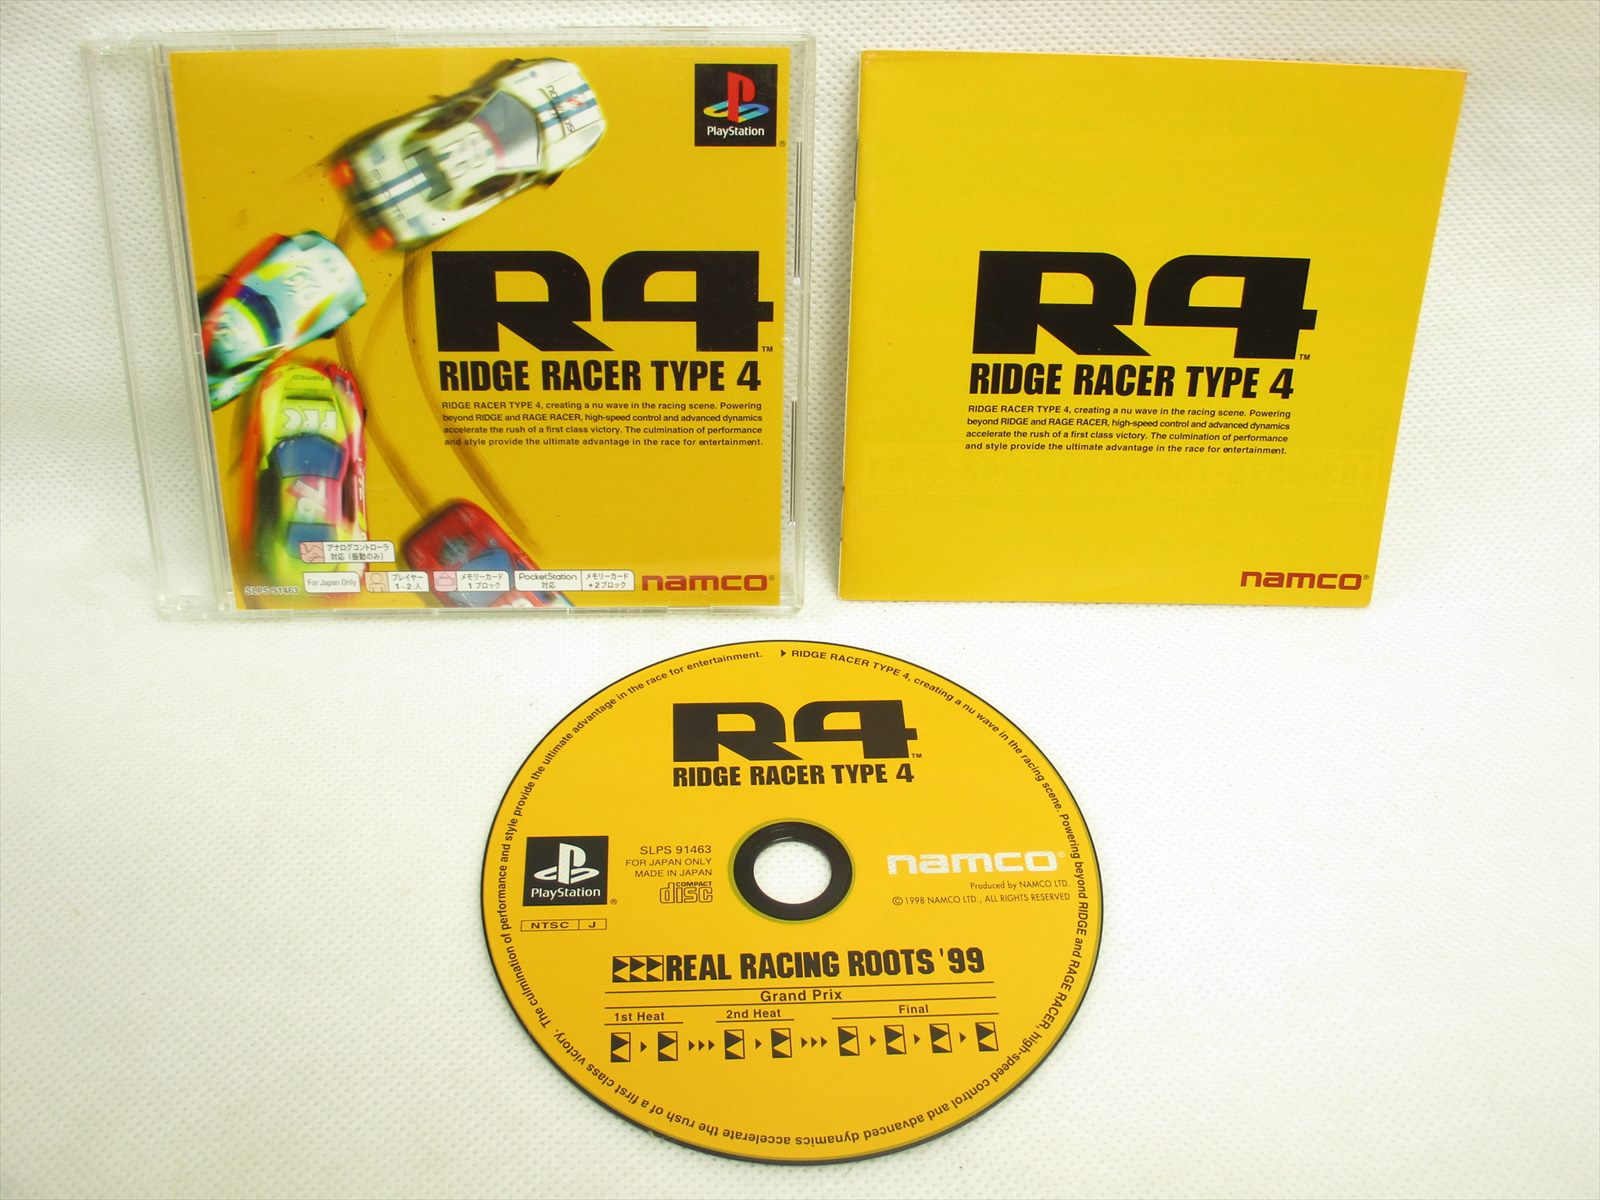 R4 Ridge Racer Type 4 Psone Books Ps1 Playstation Japan Game P1 4907892011014 Ebay